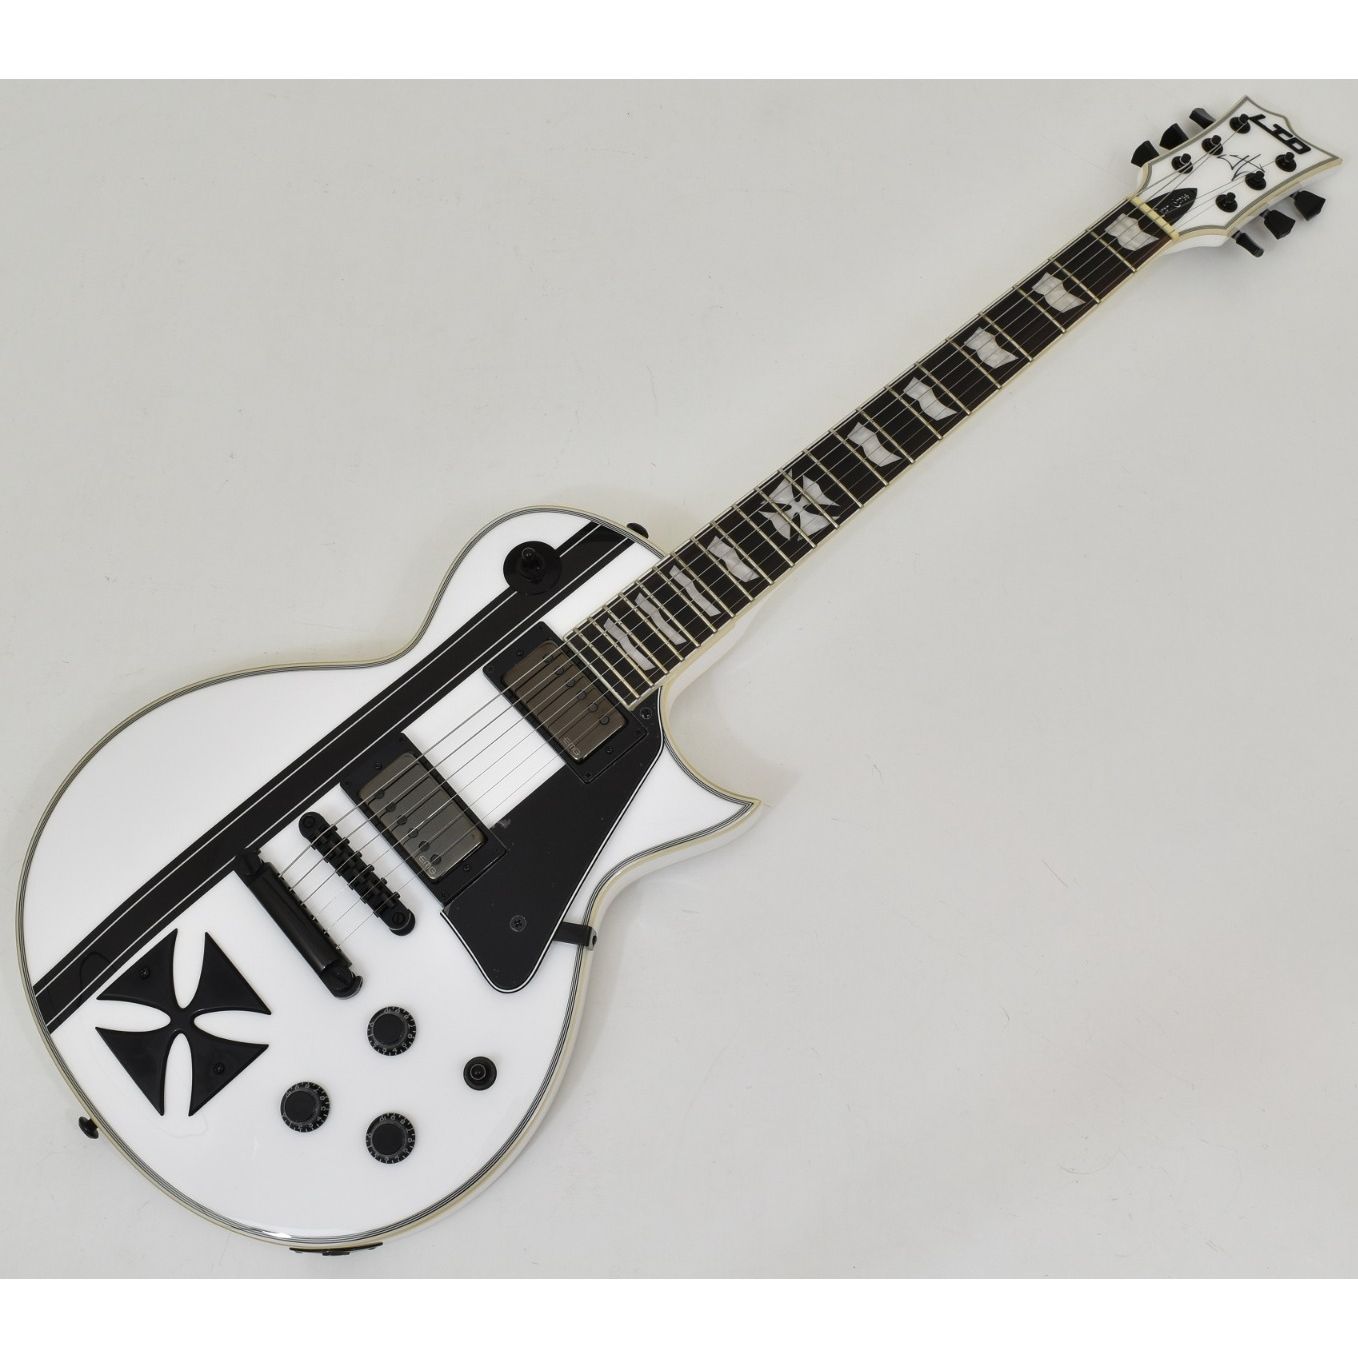 Esp Ltd James Hetfield Iron Cross Guitar Snow White B Stock 0480 Lir